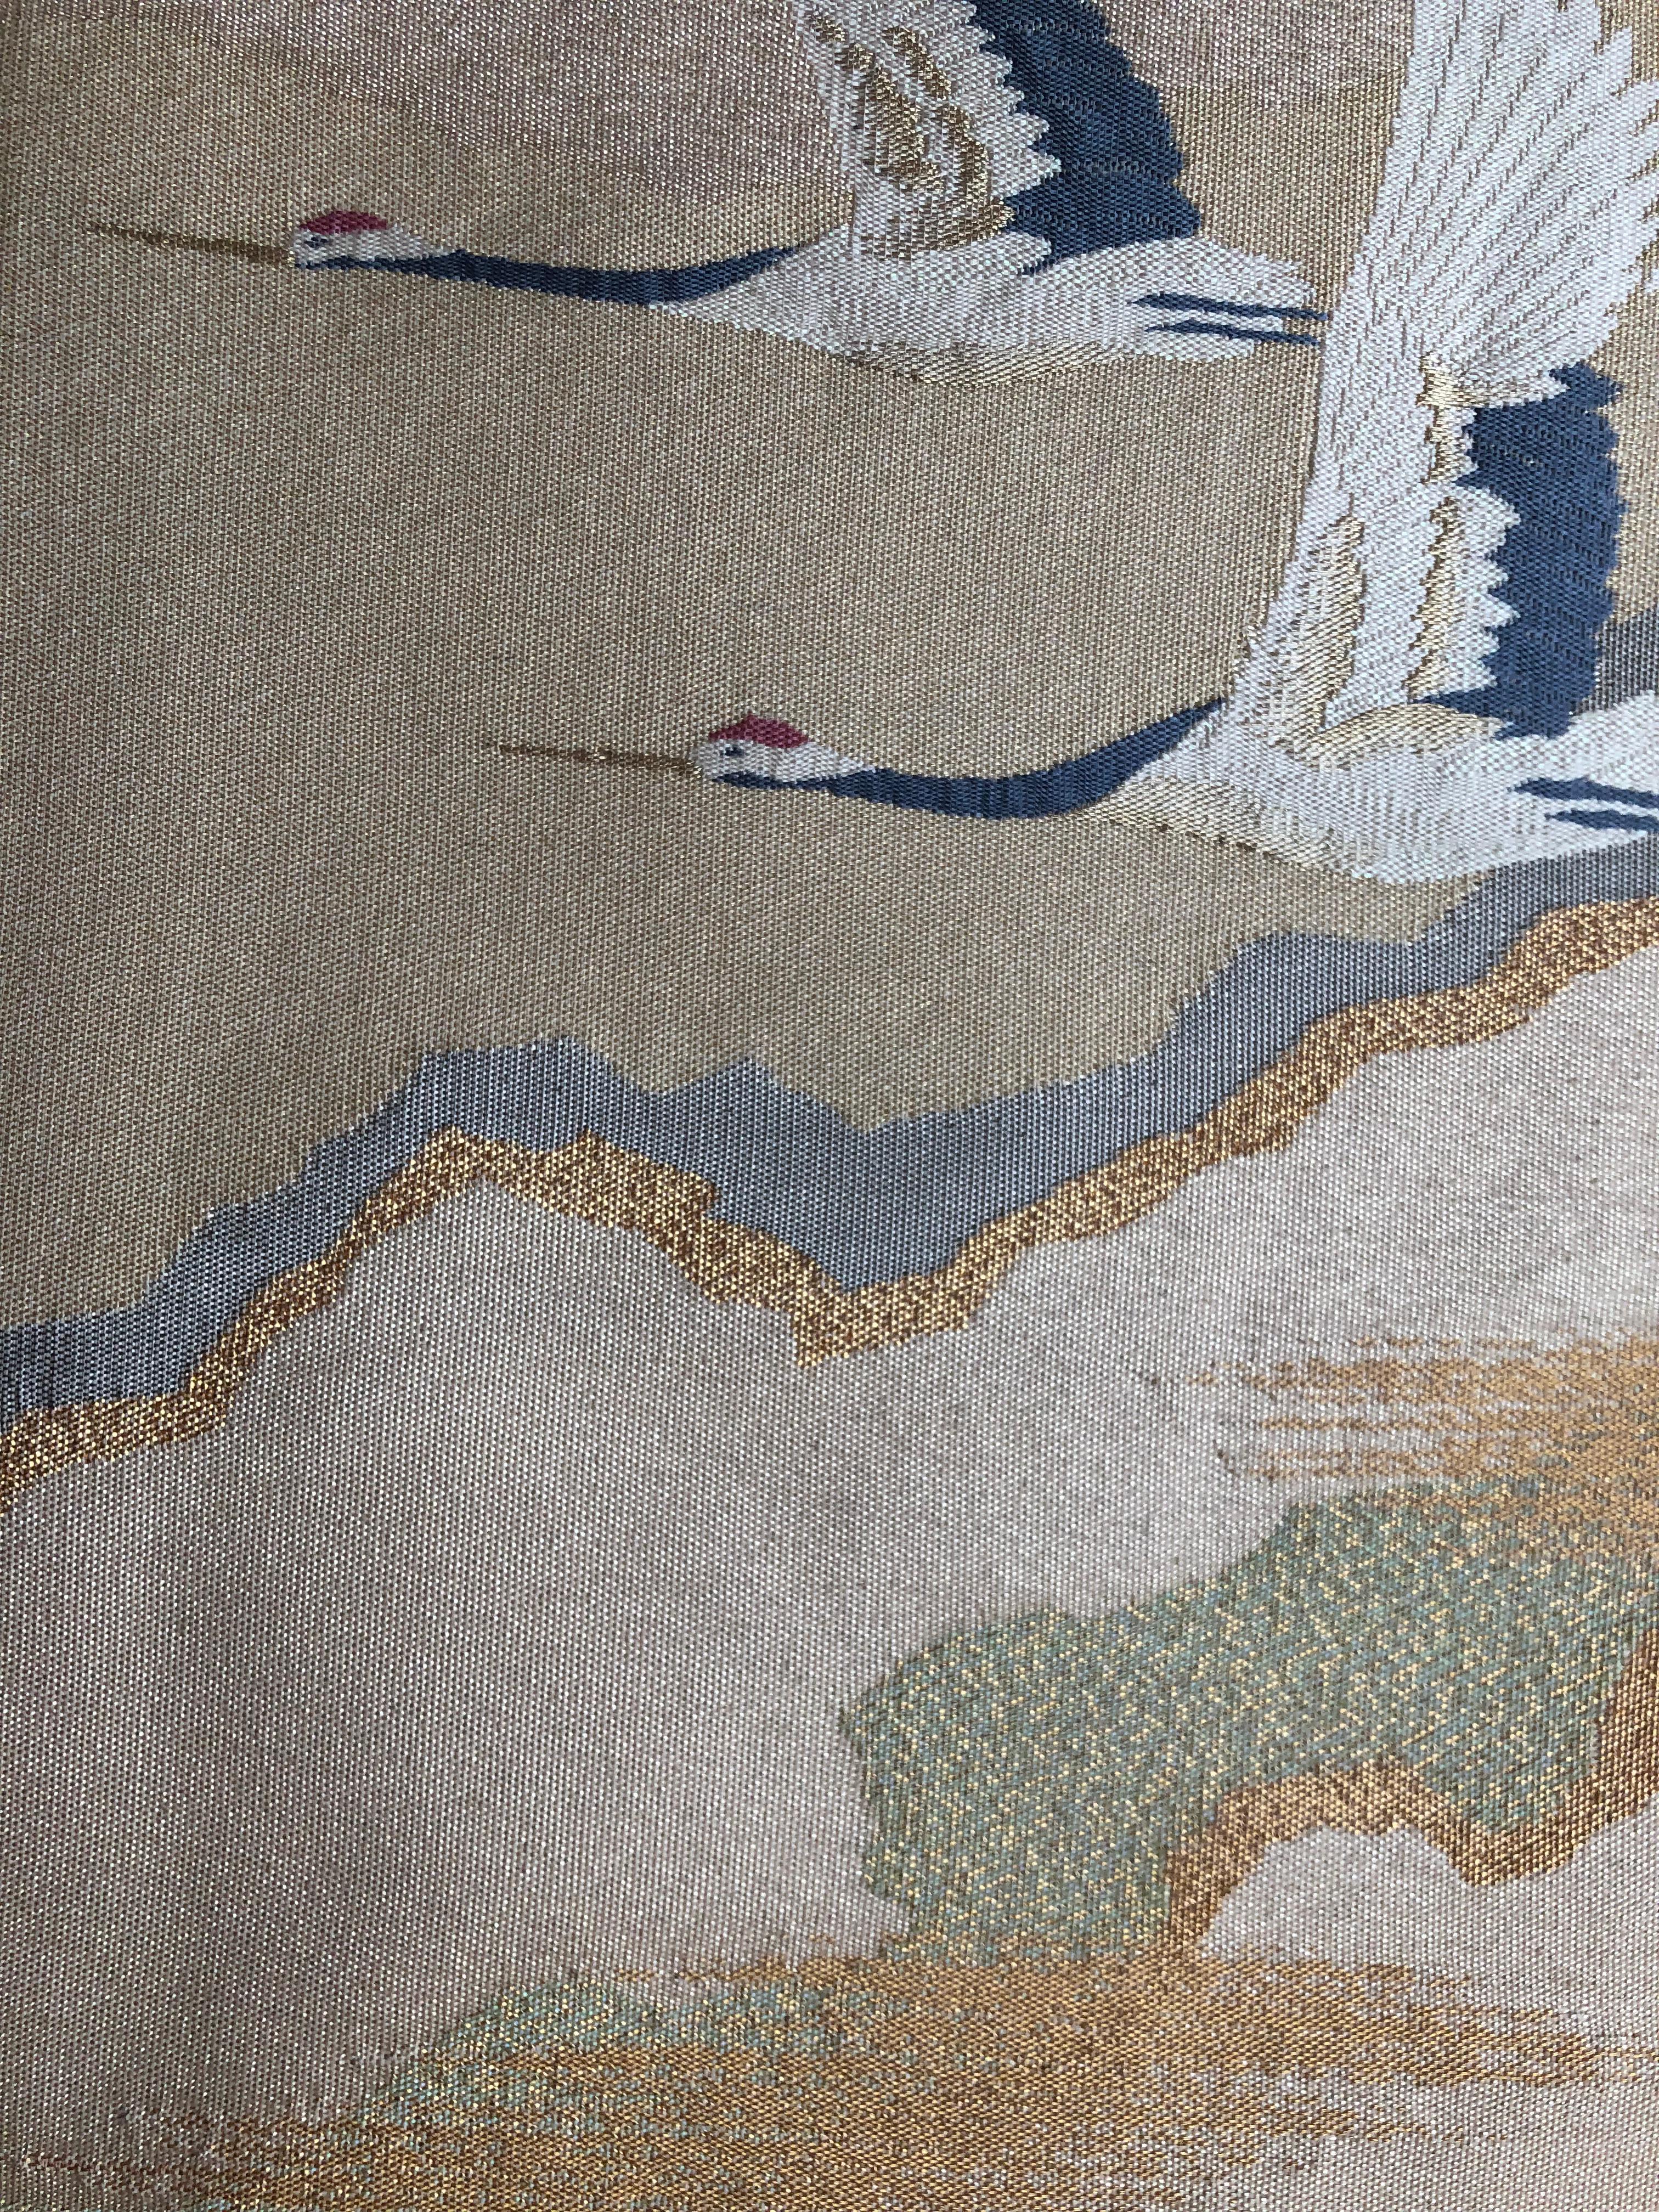 Kimono Tapestry 